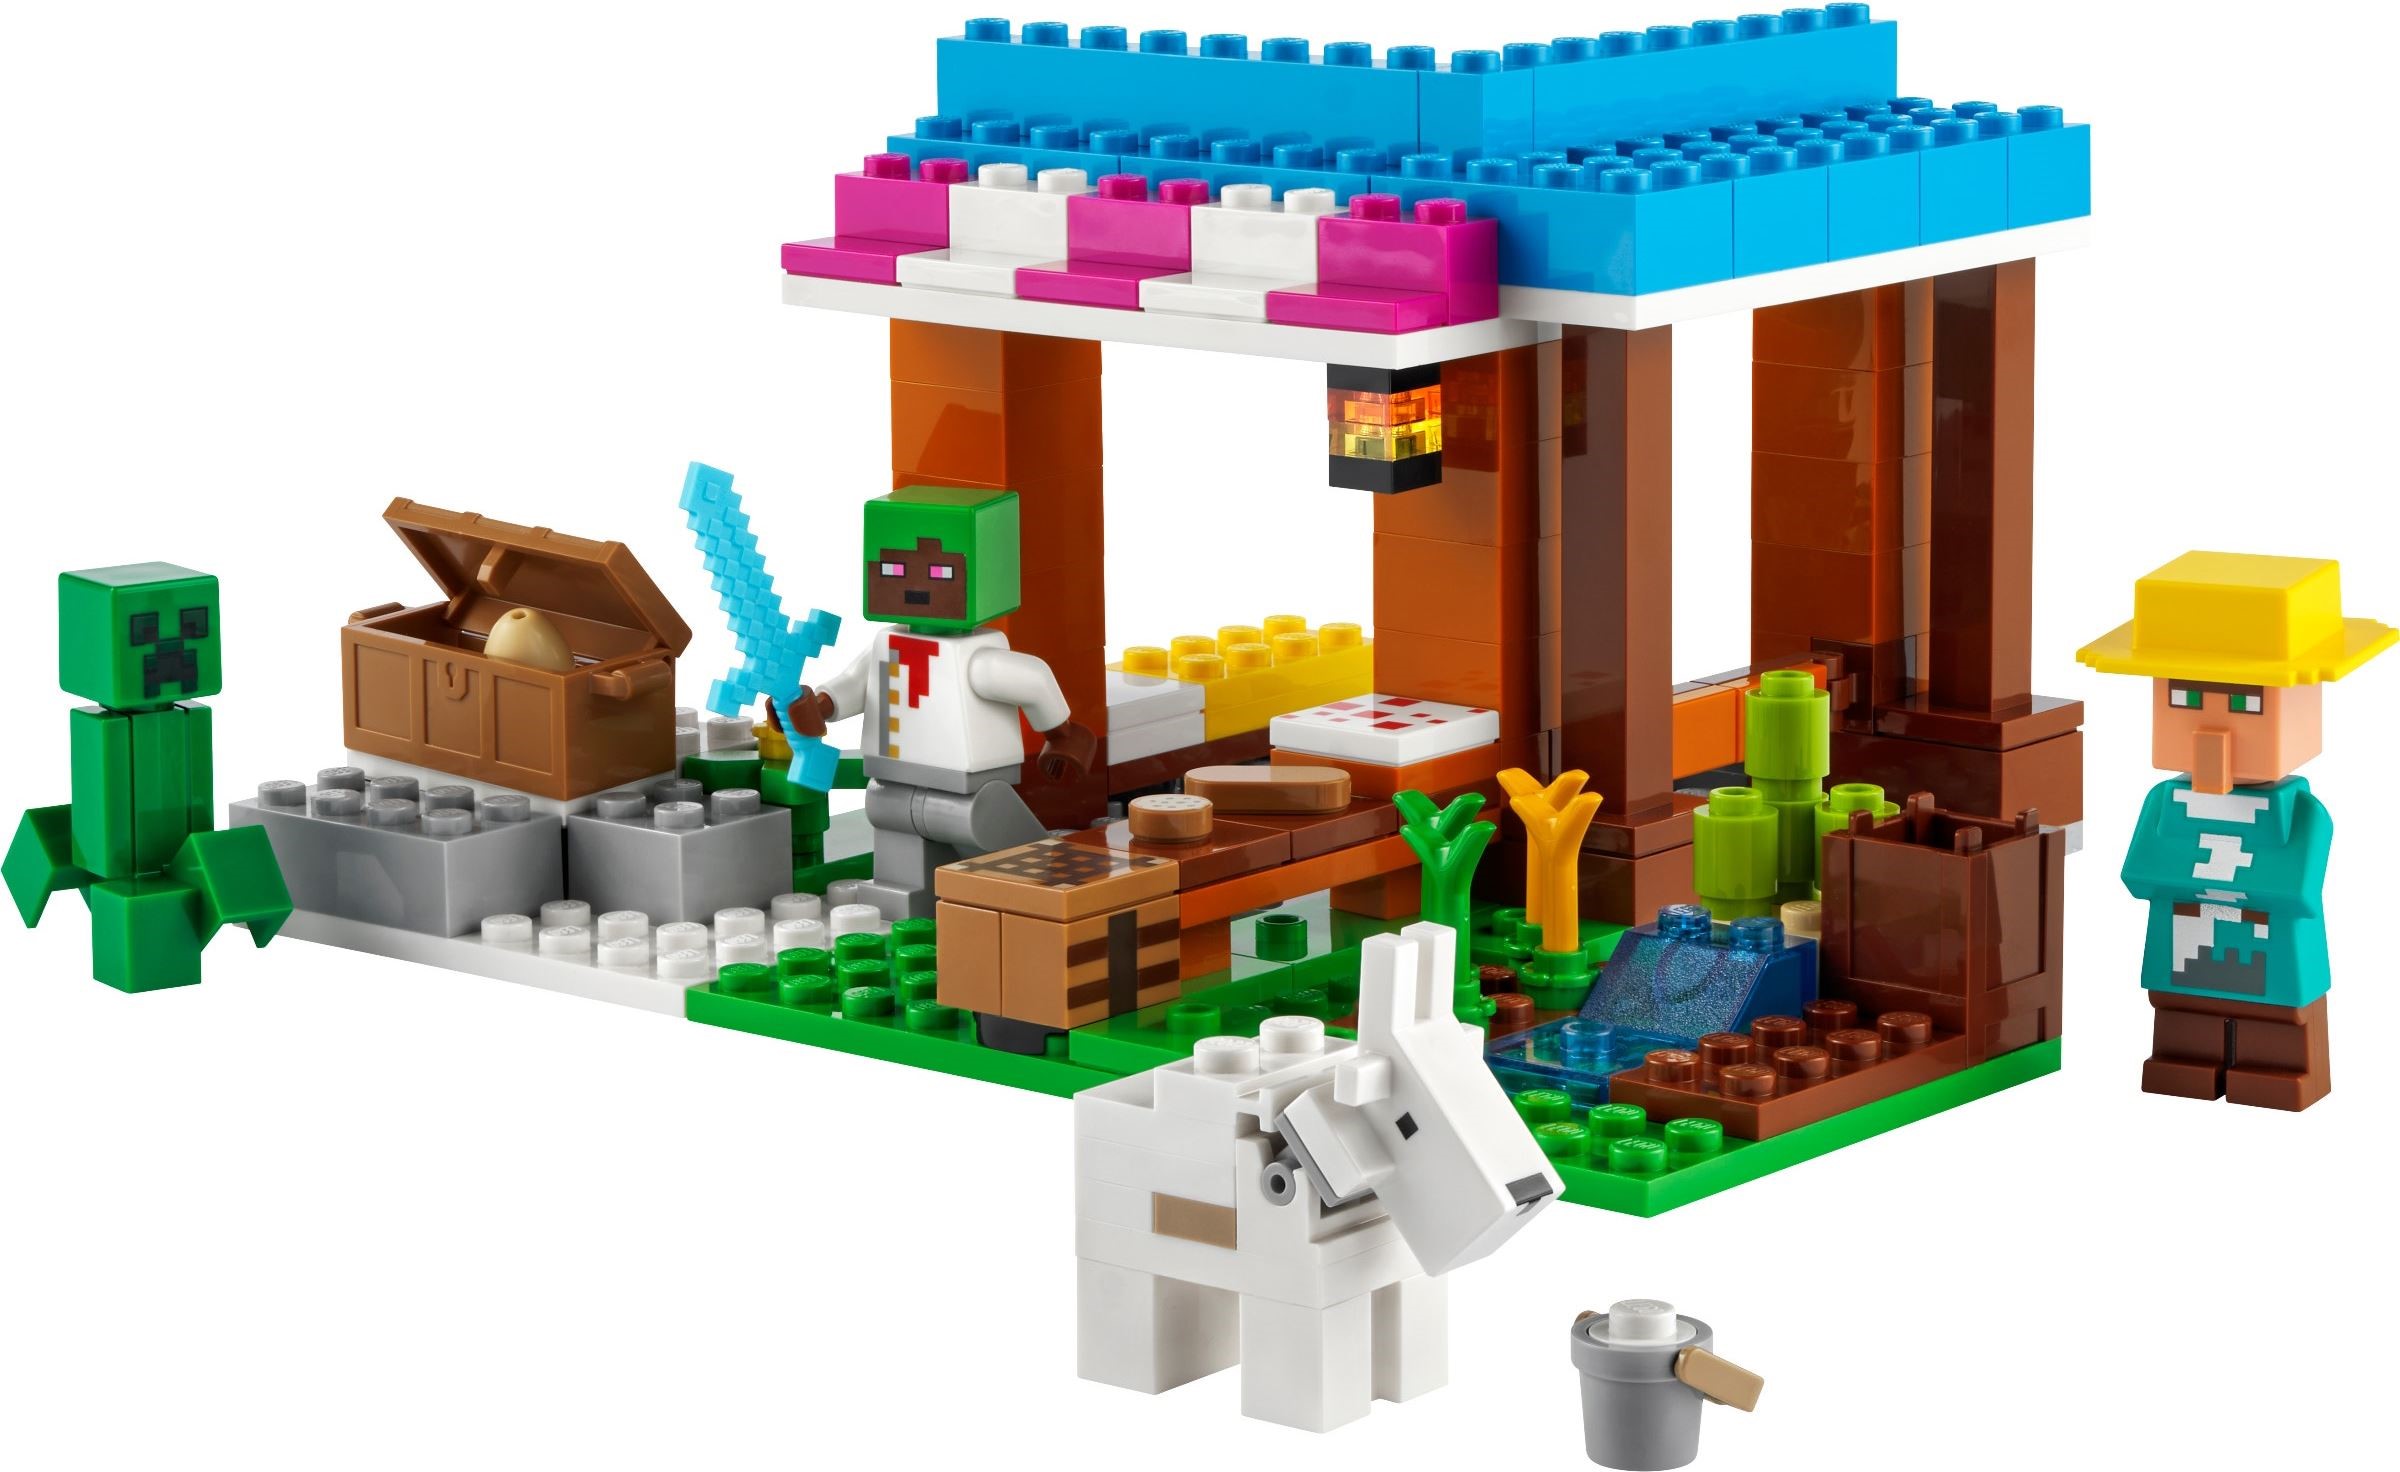 Lego Minecraft Overworld Adventures 3 In 1 Building Set Pack 66779 : Target